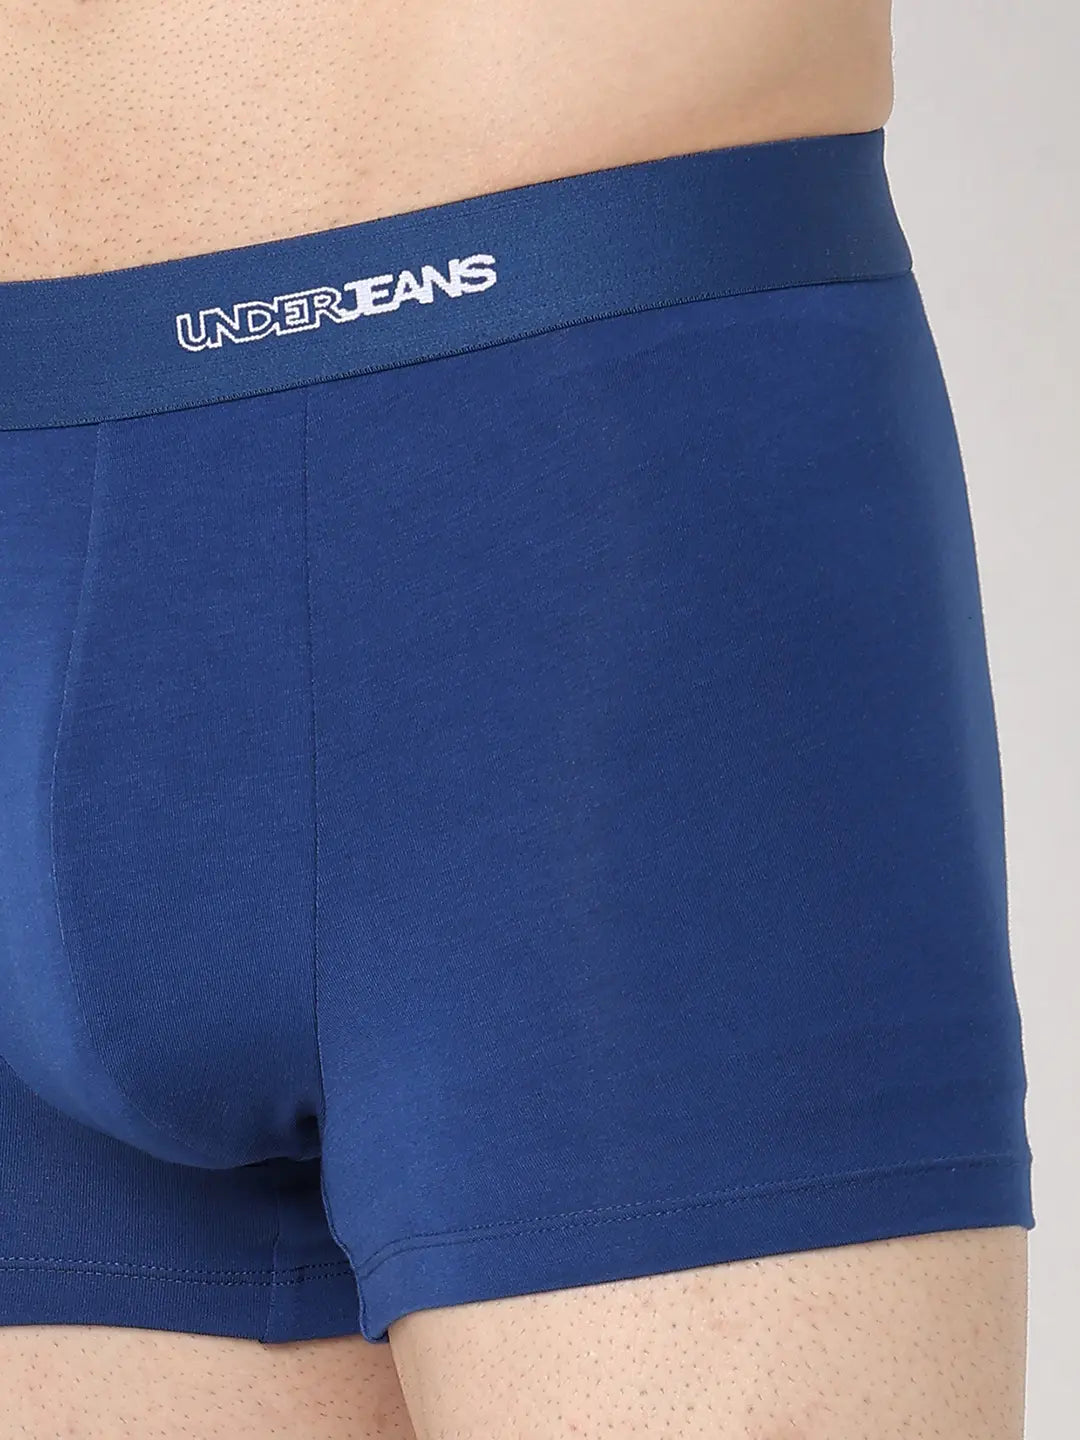 Underjeans by Spykar Men Premium Dark Blue Cotton Blend Regular Fit Trunk